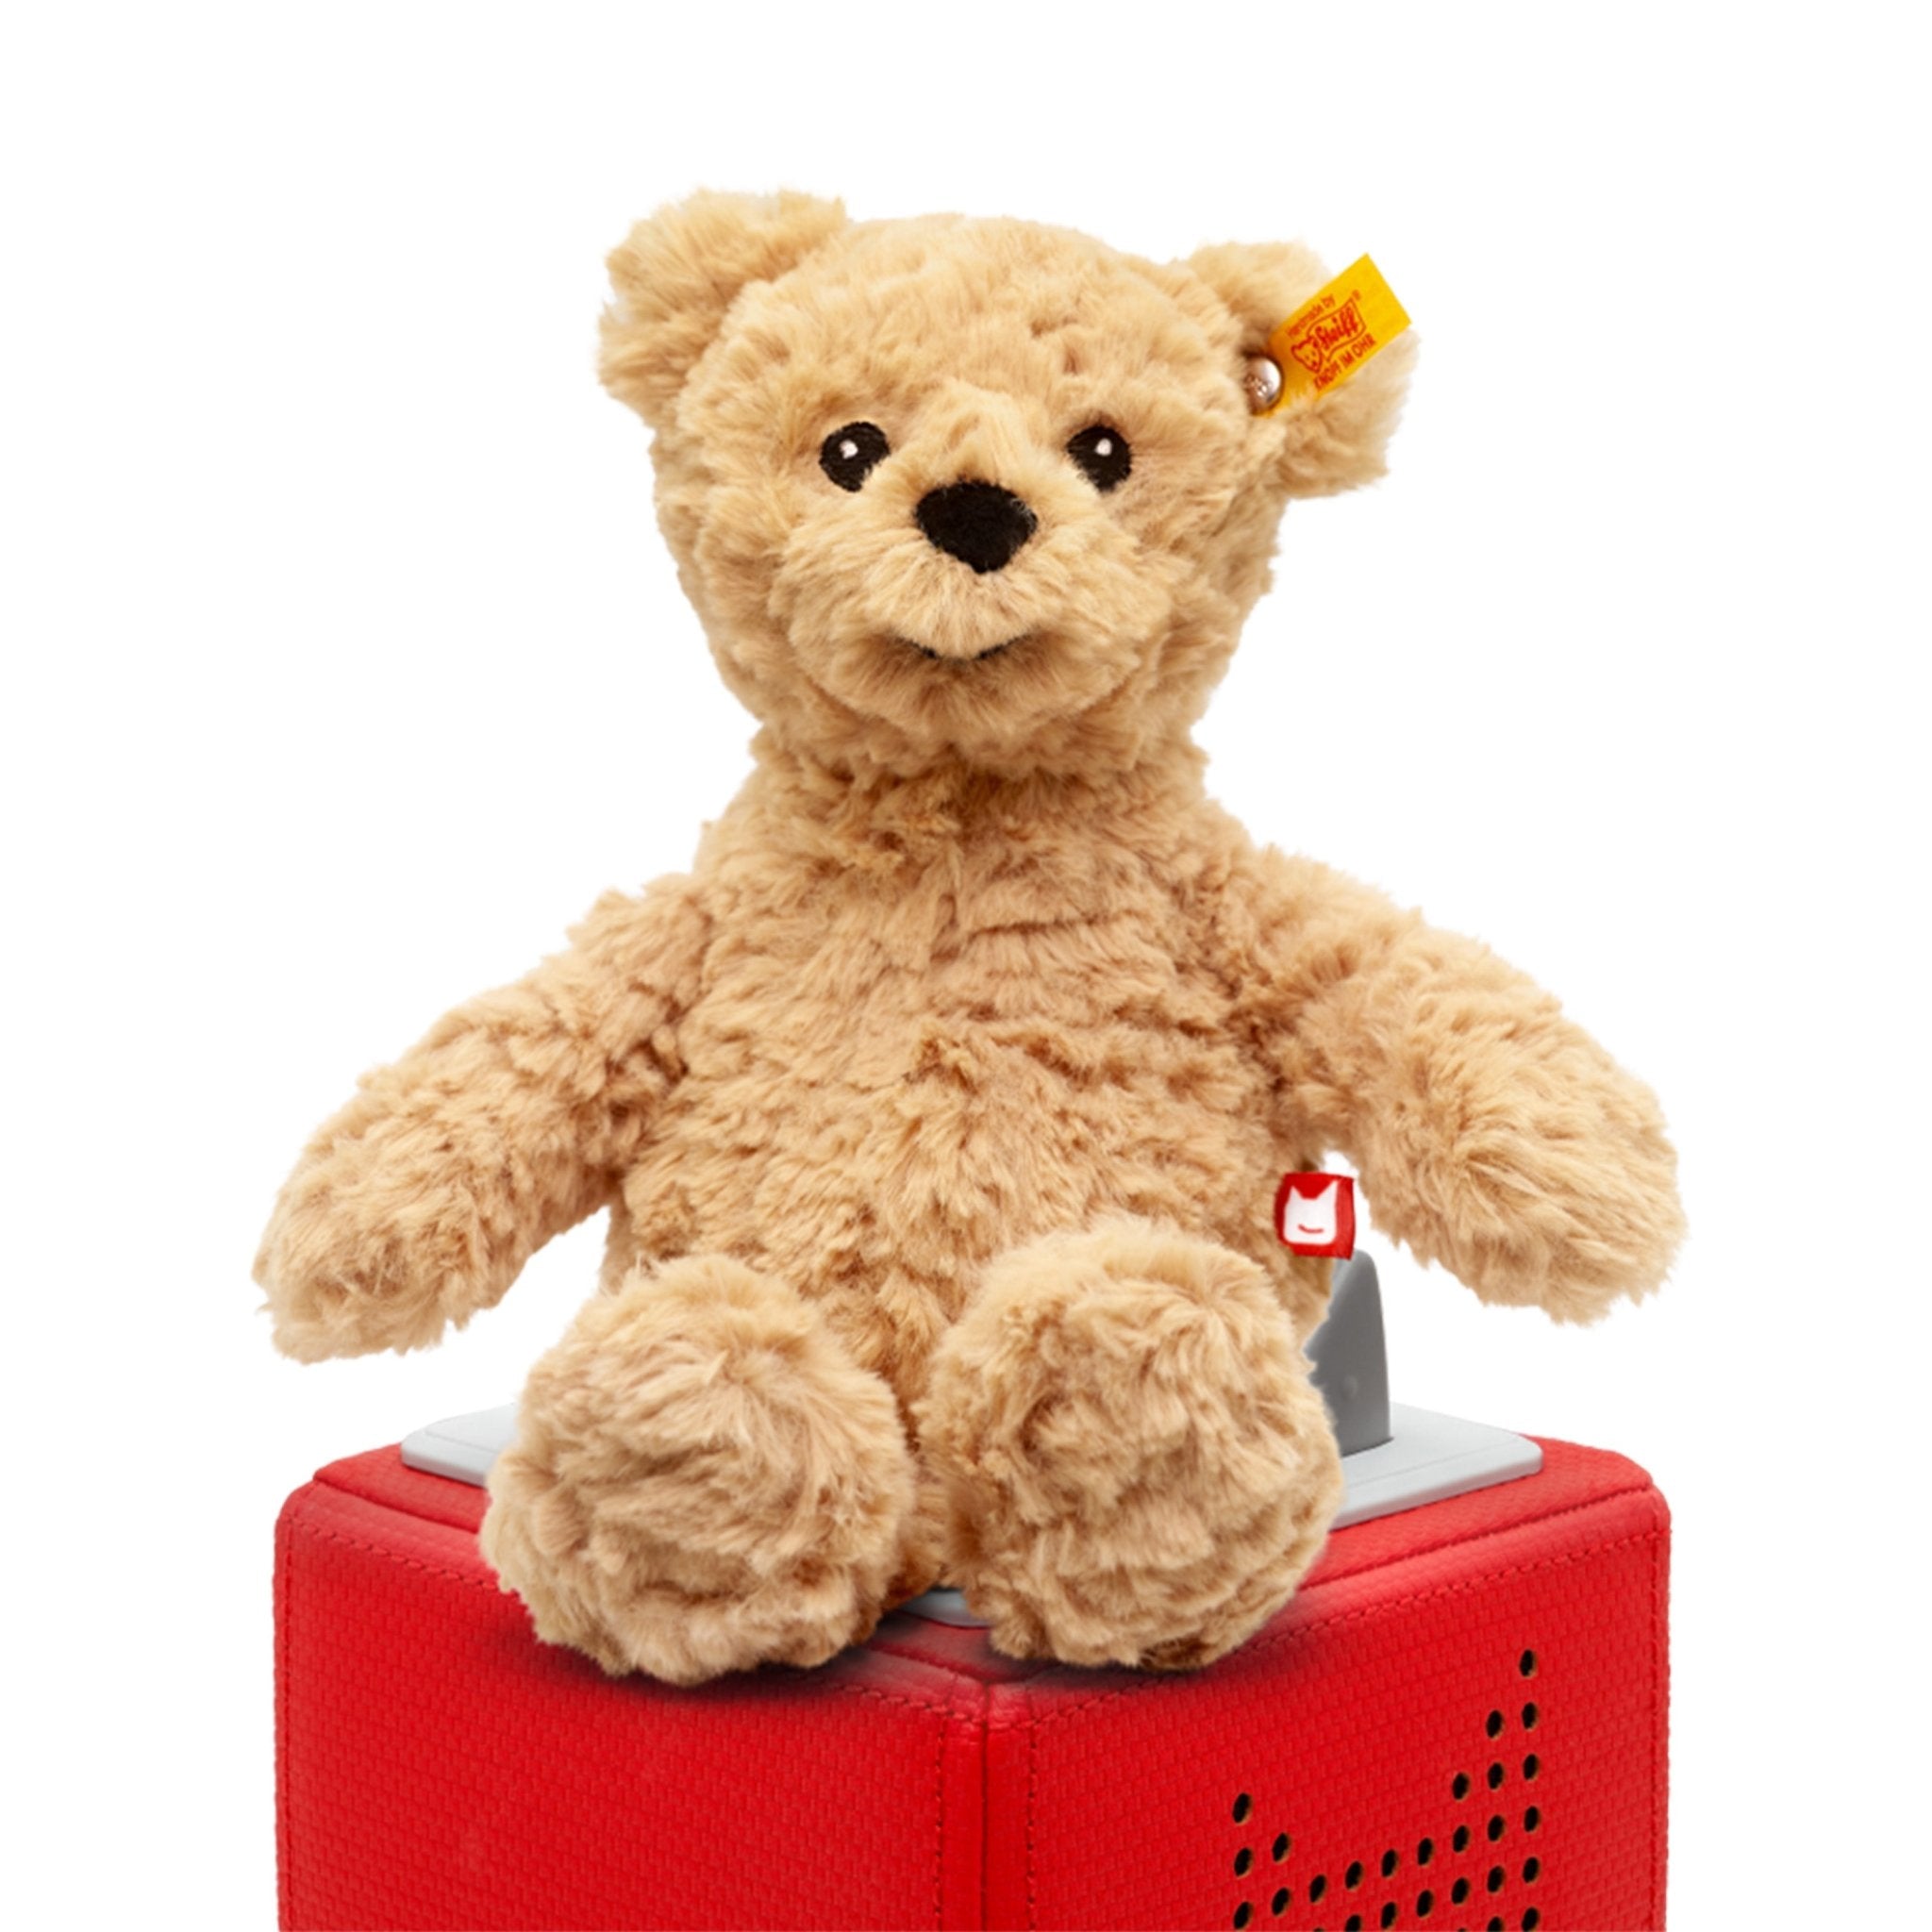 Tonies Steiff Soft Cuddly friends: Jimmy Bear - ANB Baby -4001505112997$20 - $50